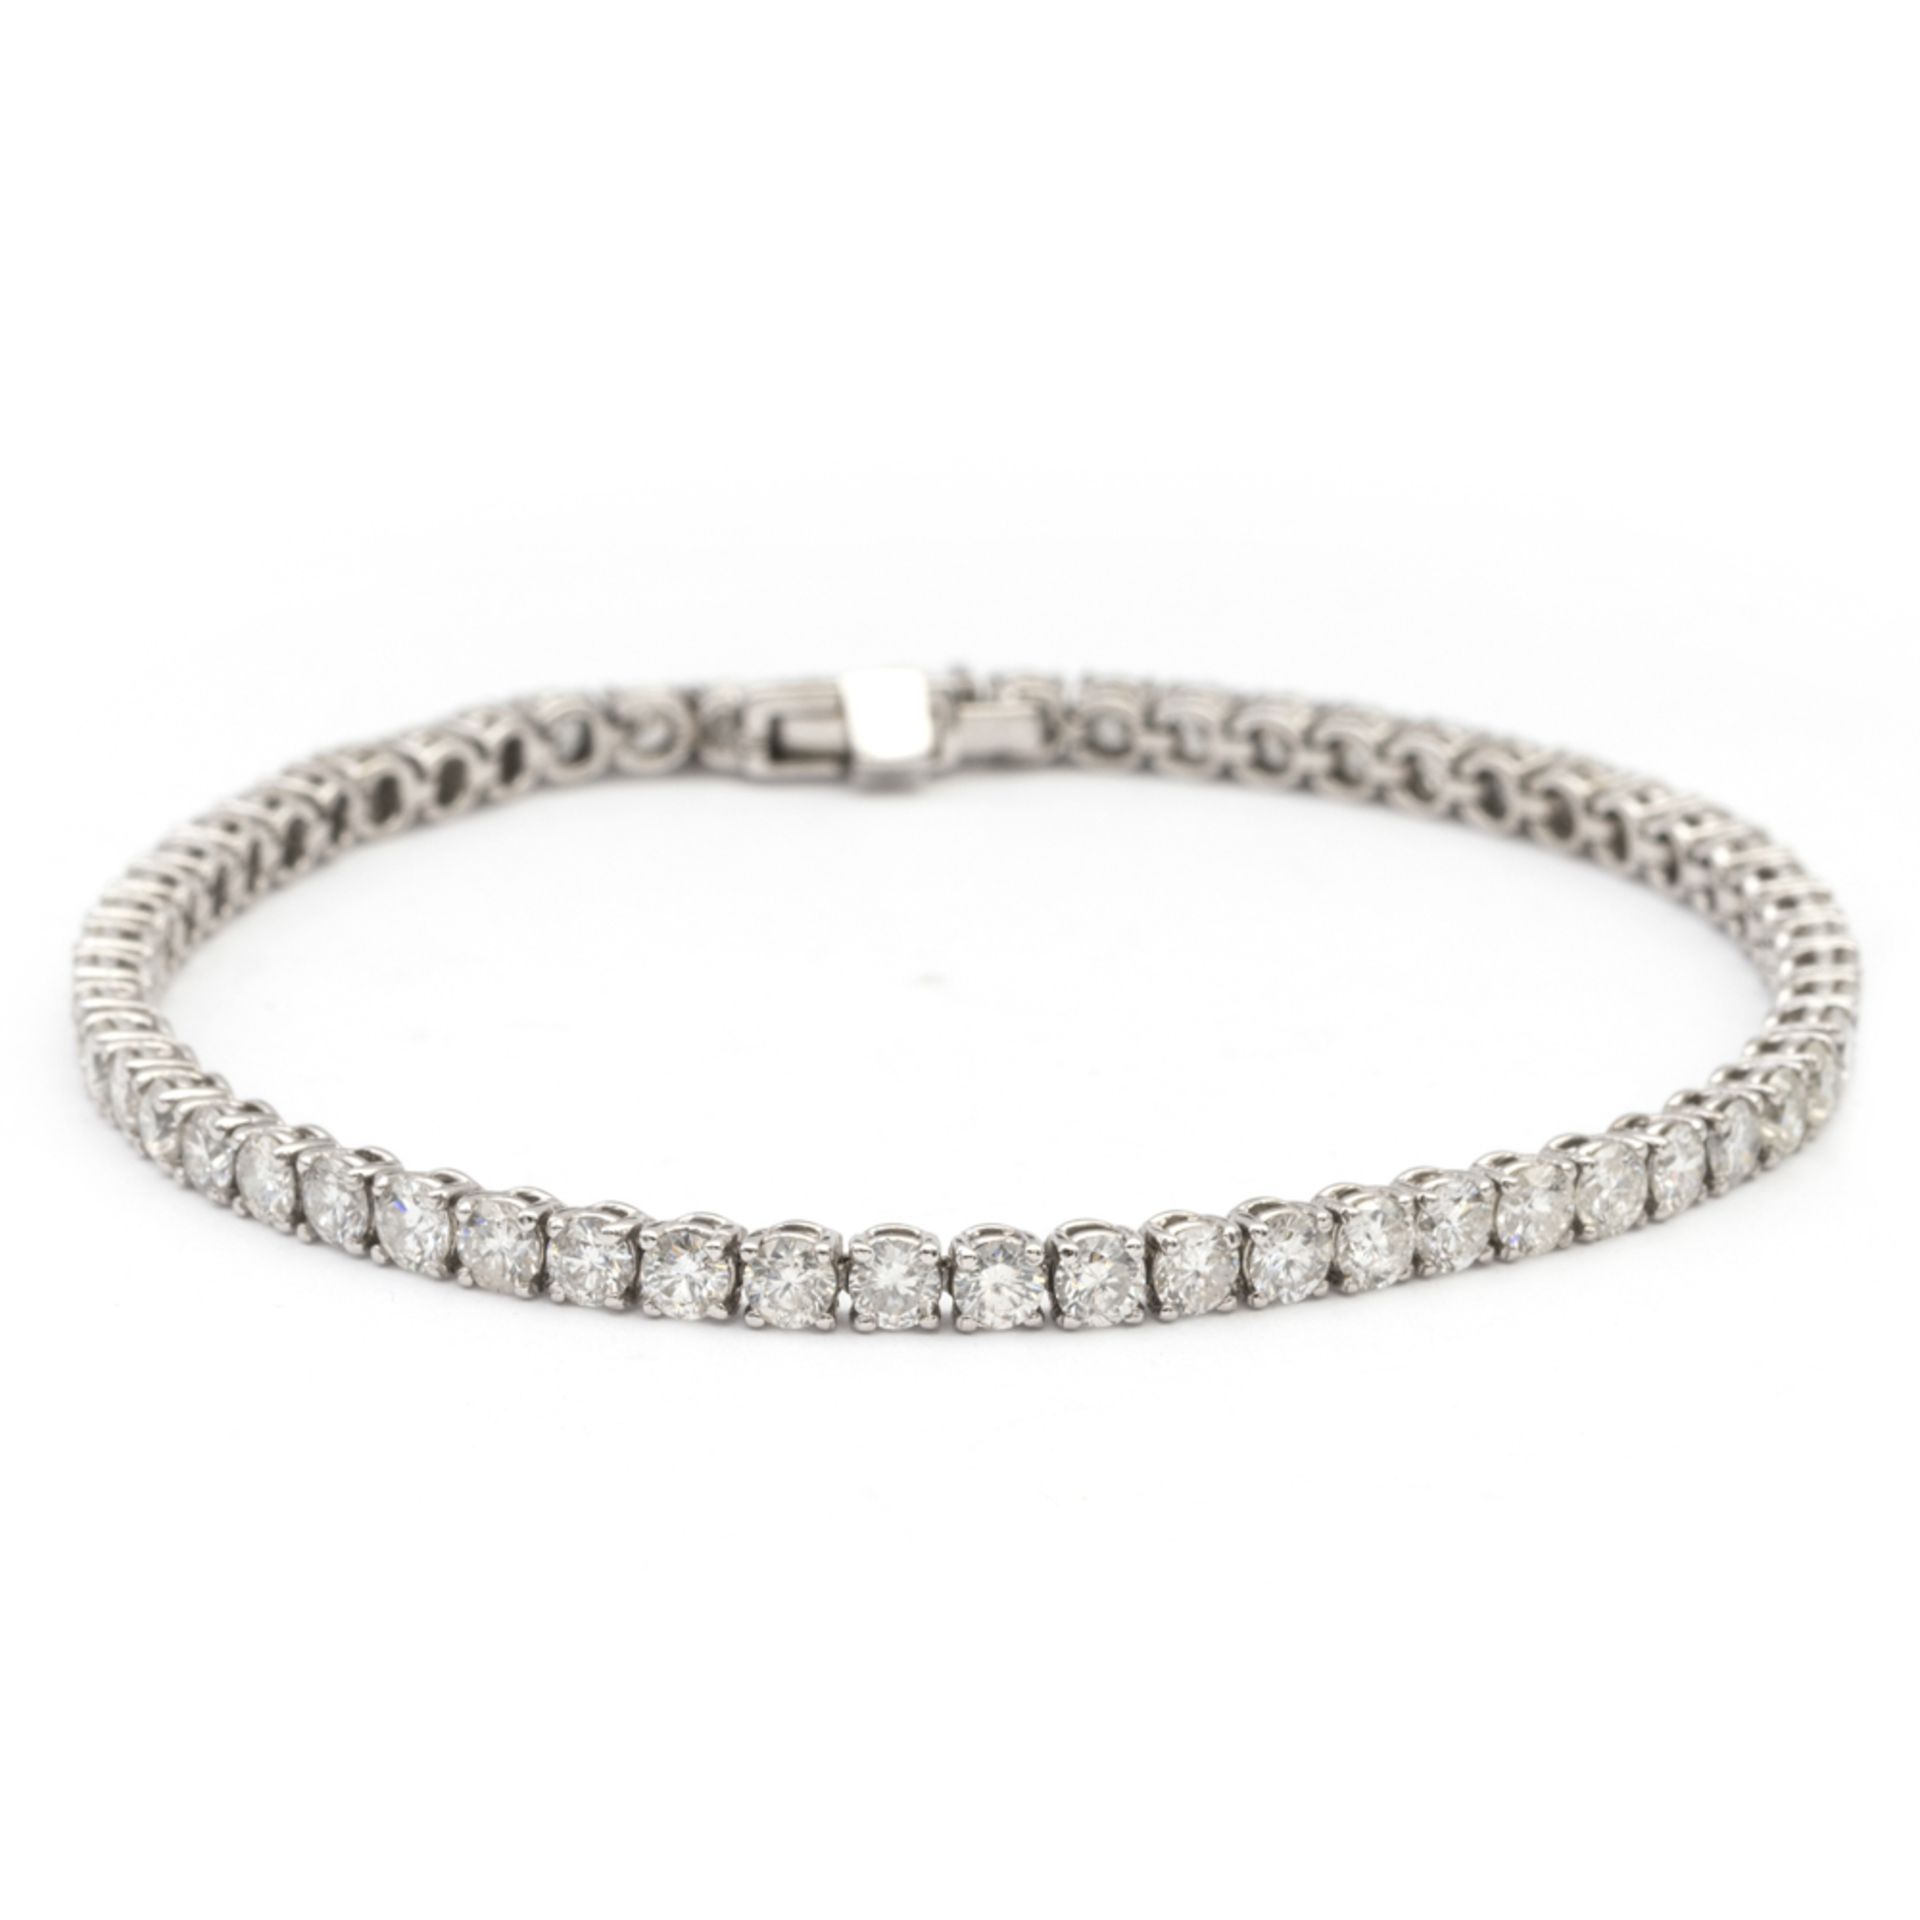 18kt white gold and diamonds Tennis bracelet